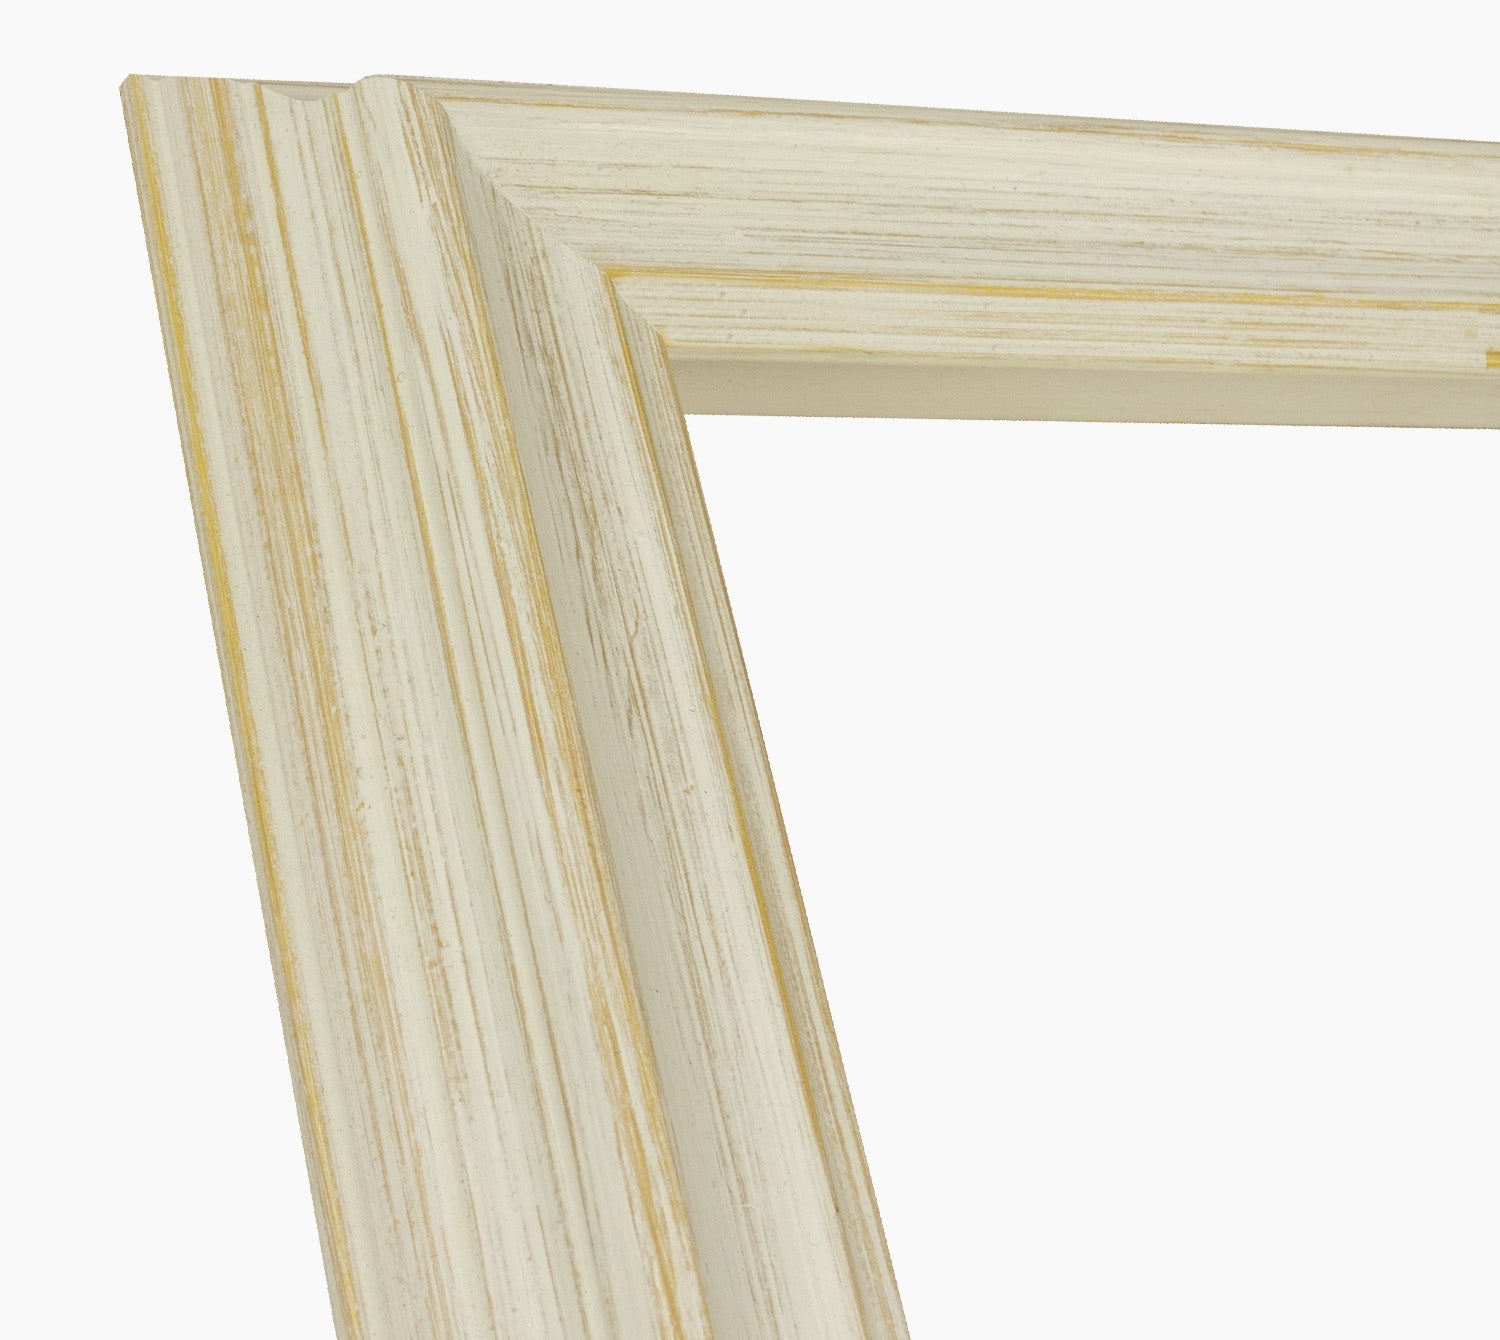 Ancho Blanco Marco de madera 20x30cm - Calidad superior - ArtPhotoLimited